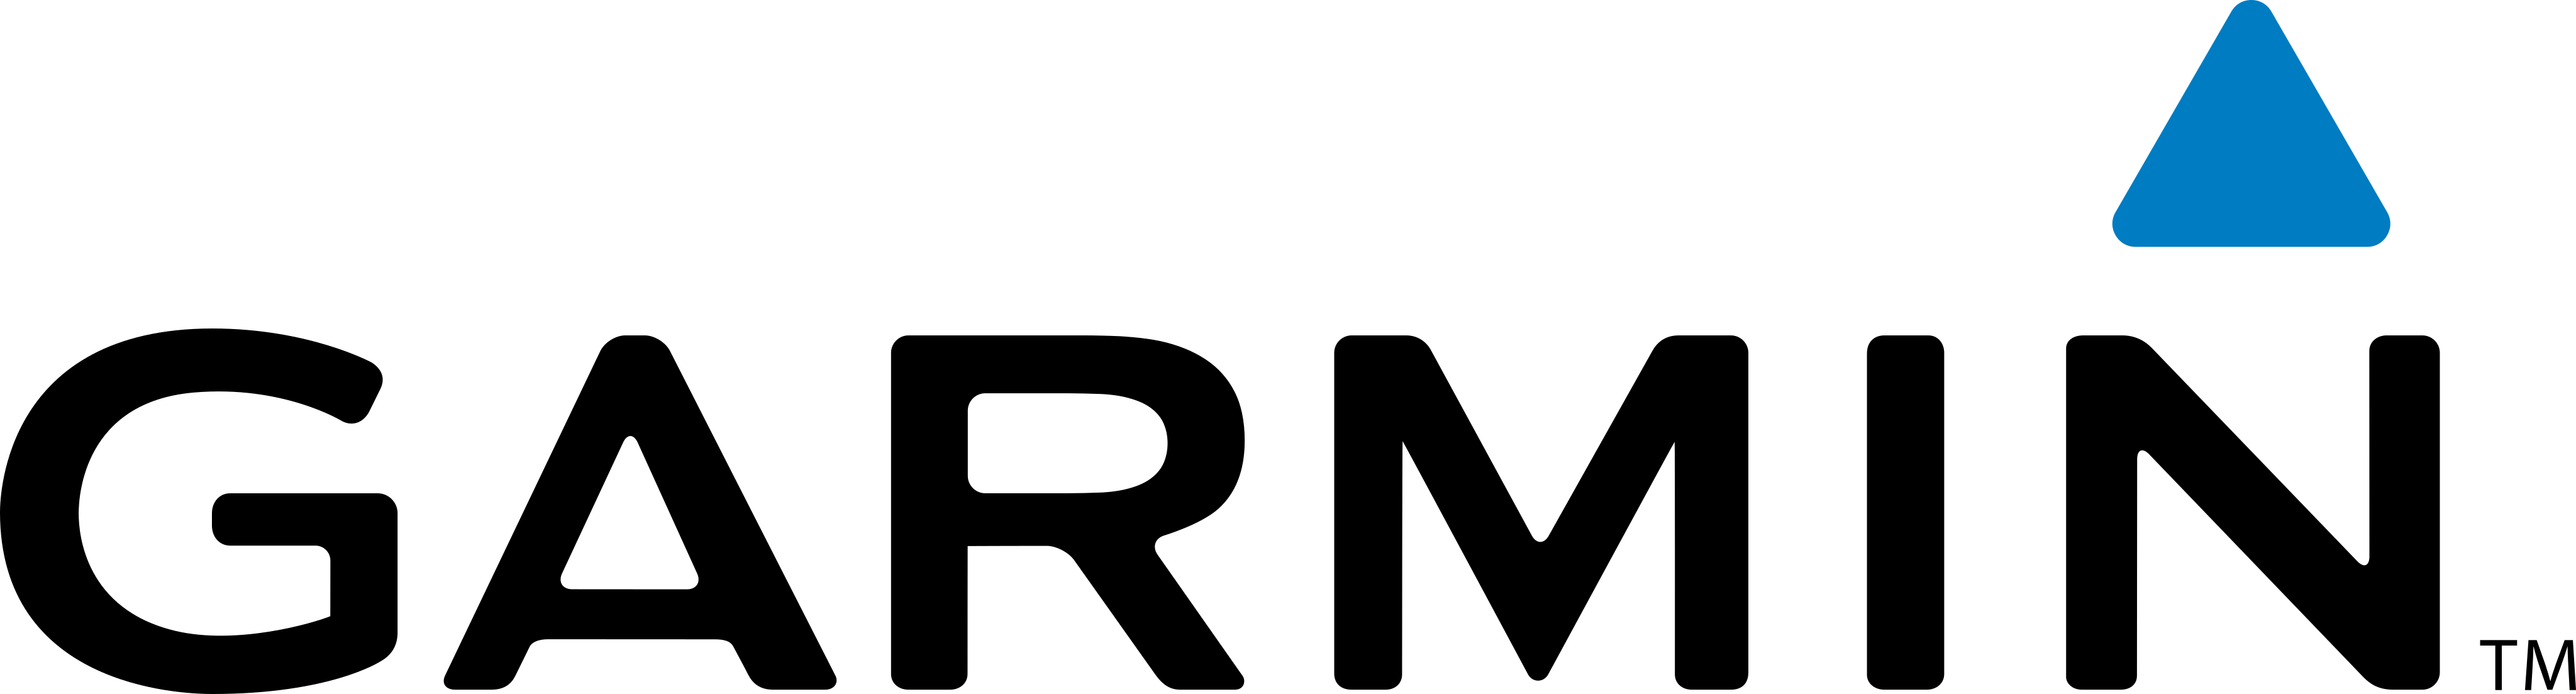 garmin logo 14 - Garmin Logo